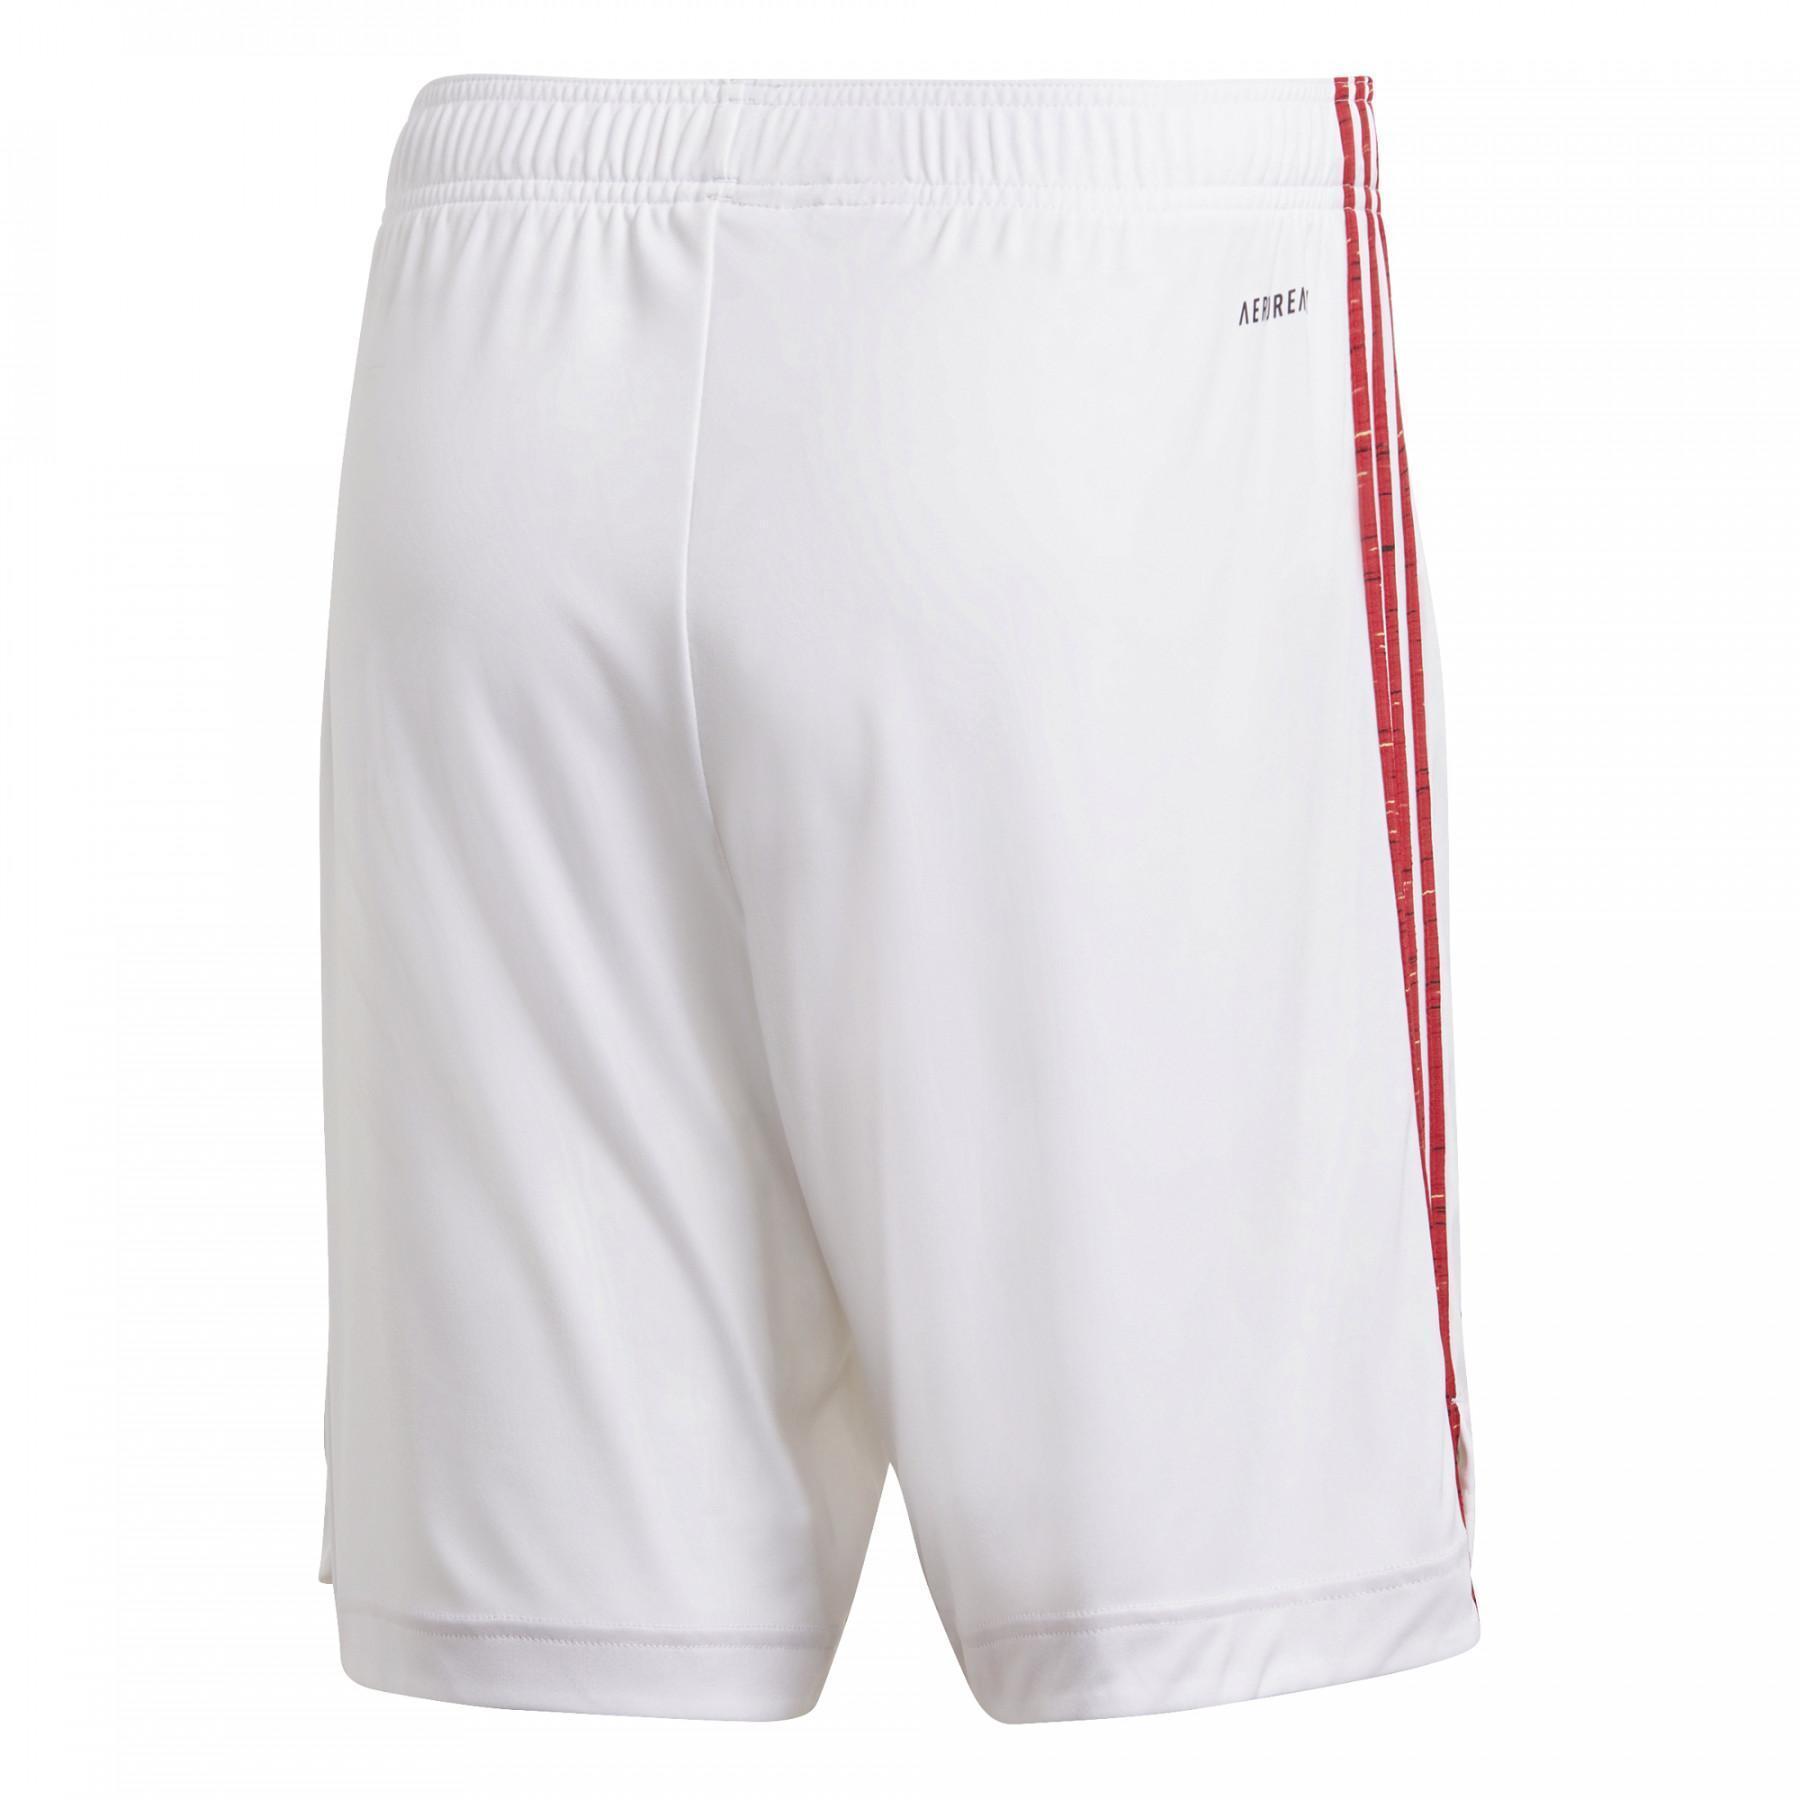 Pantalones cortos para el hogar Manchester United 2020/21